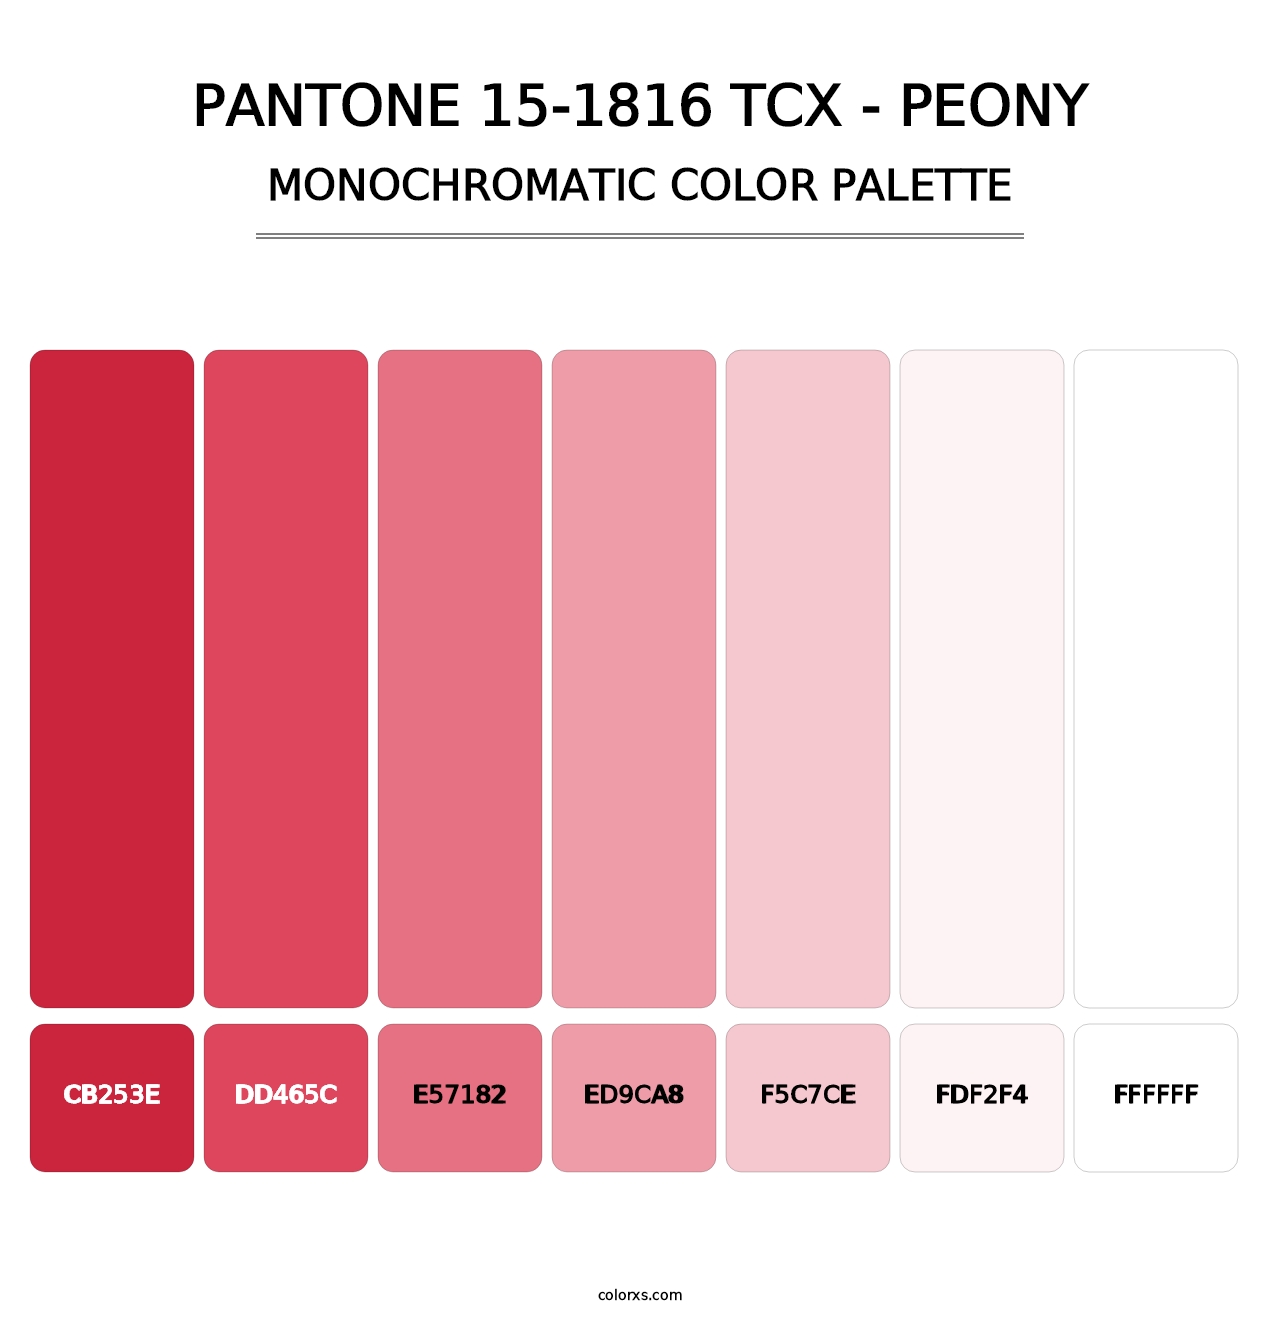 PANTONE 15-1816 TCX - Peony - Monochromatic Color Palette